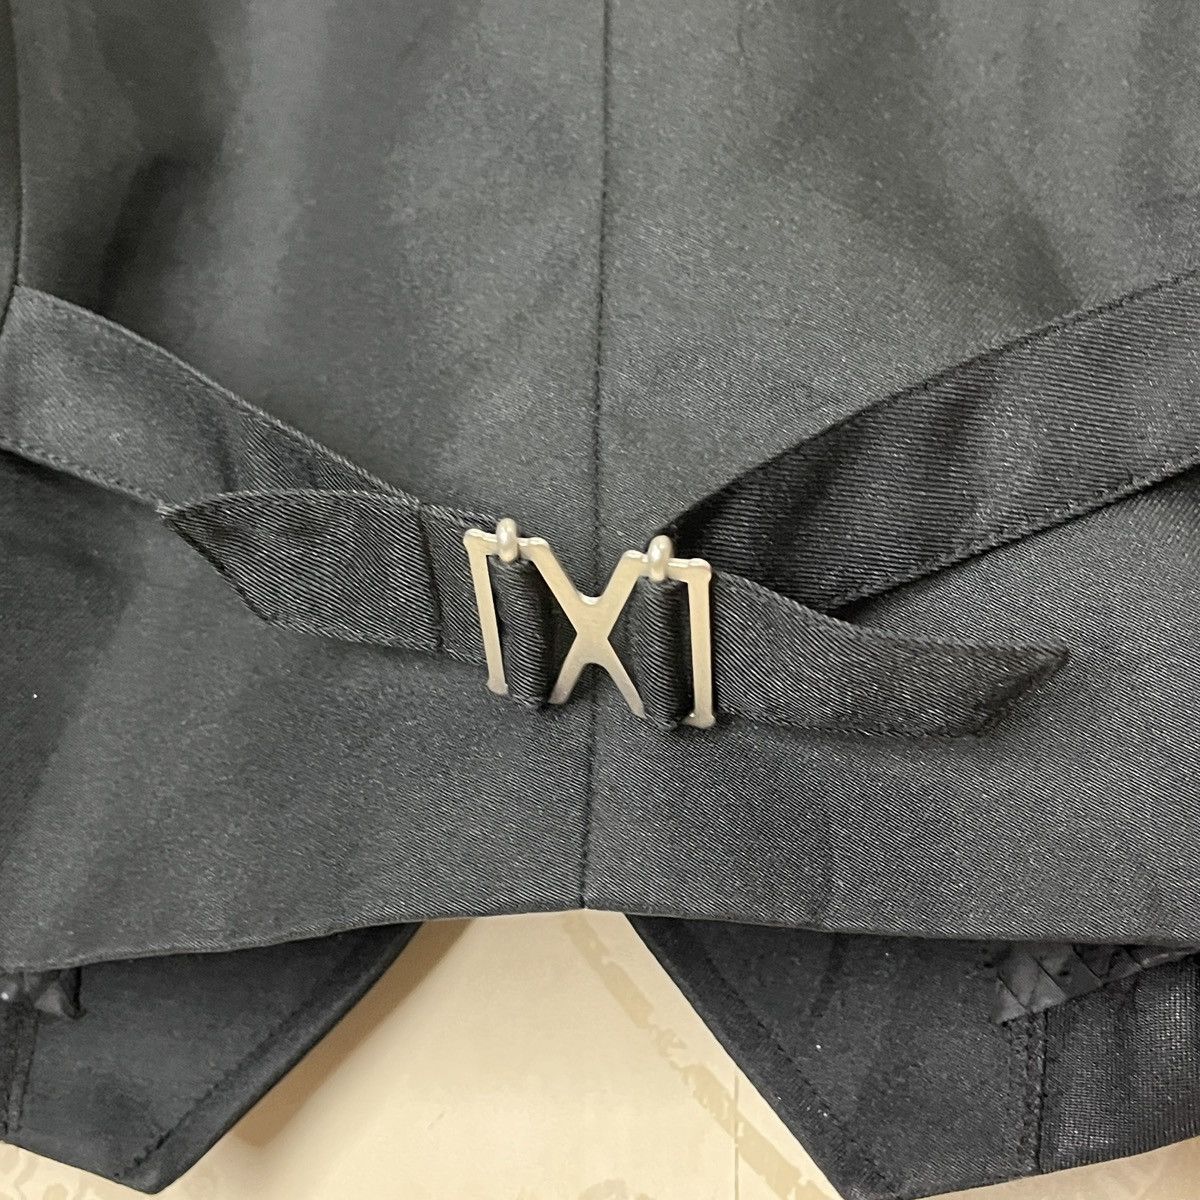 McDonalds Japan Vintage Workers Vest Collector Item - 8